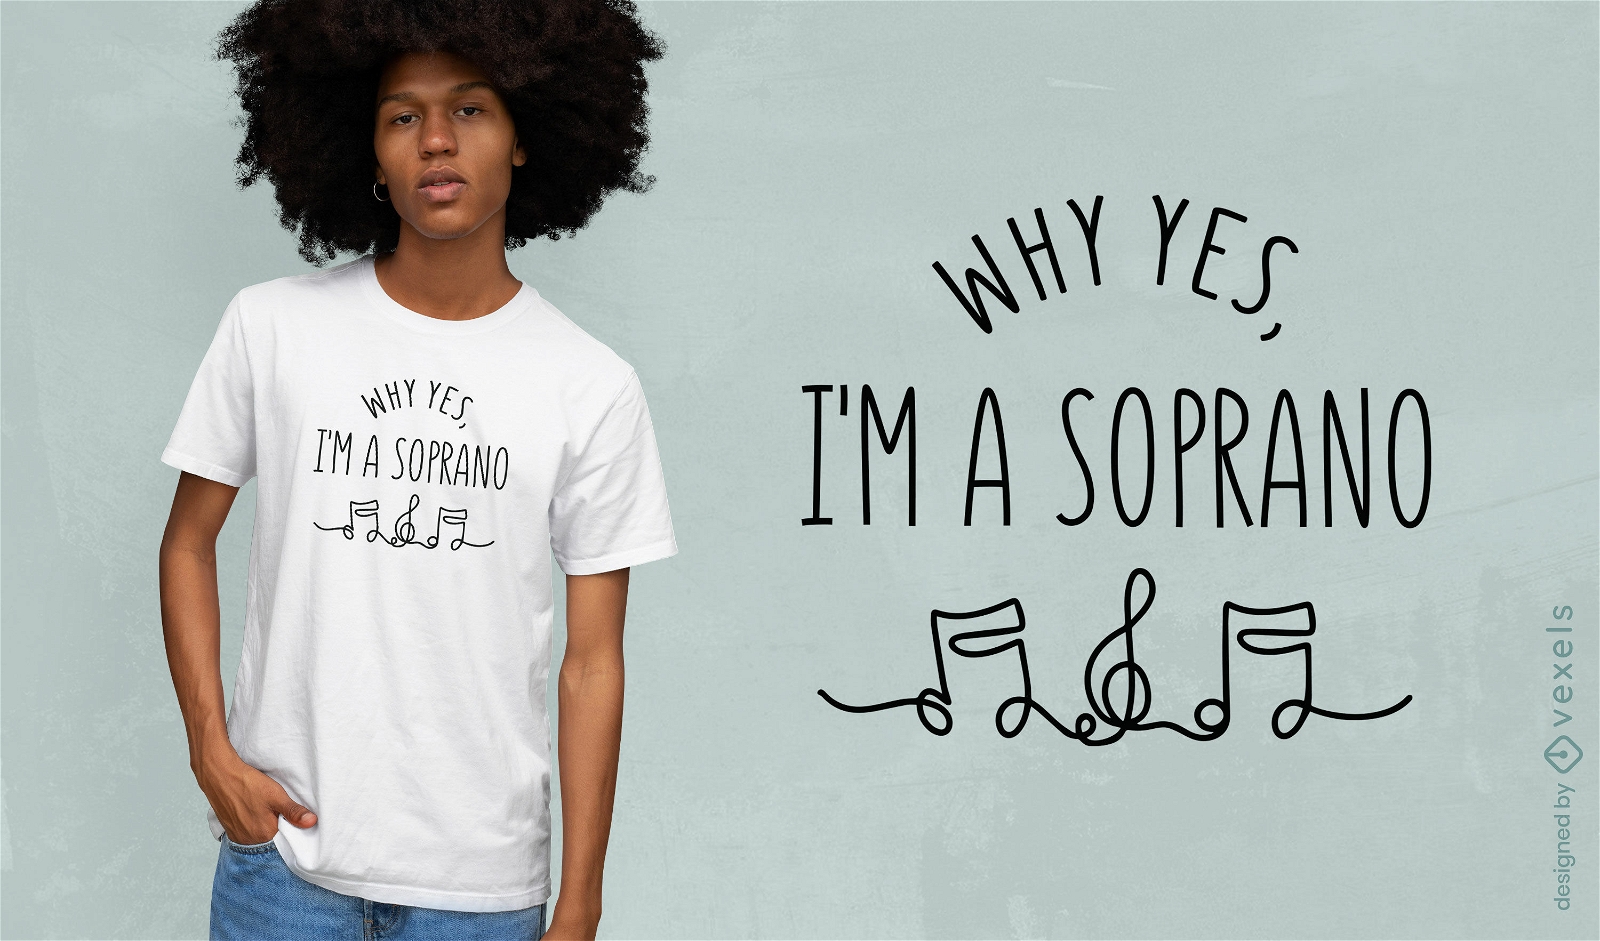 Soprano singing t-shirt design